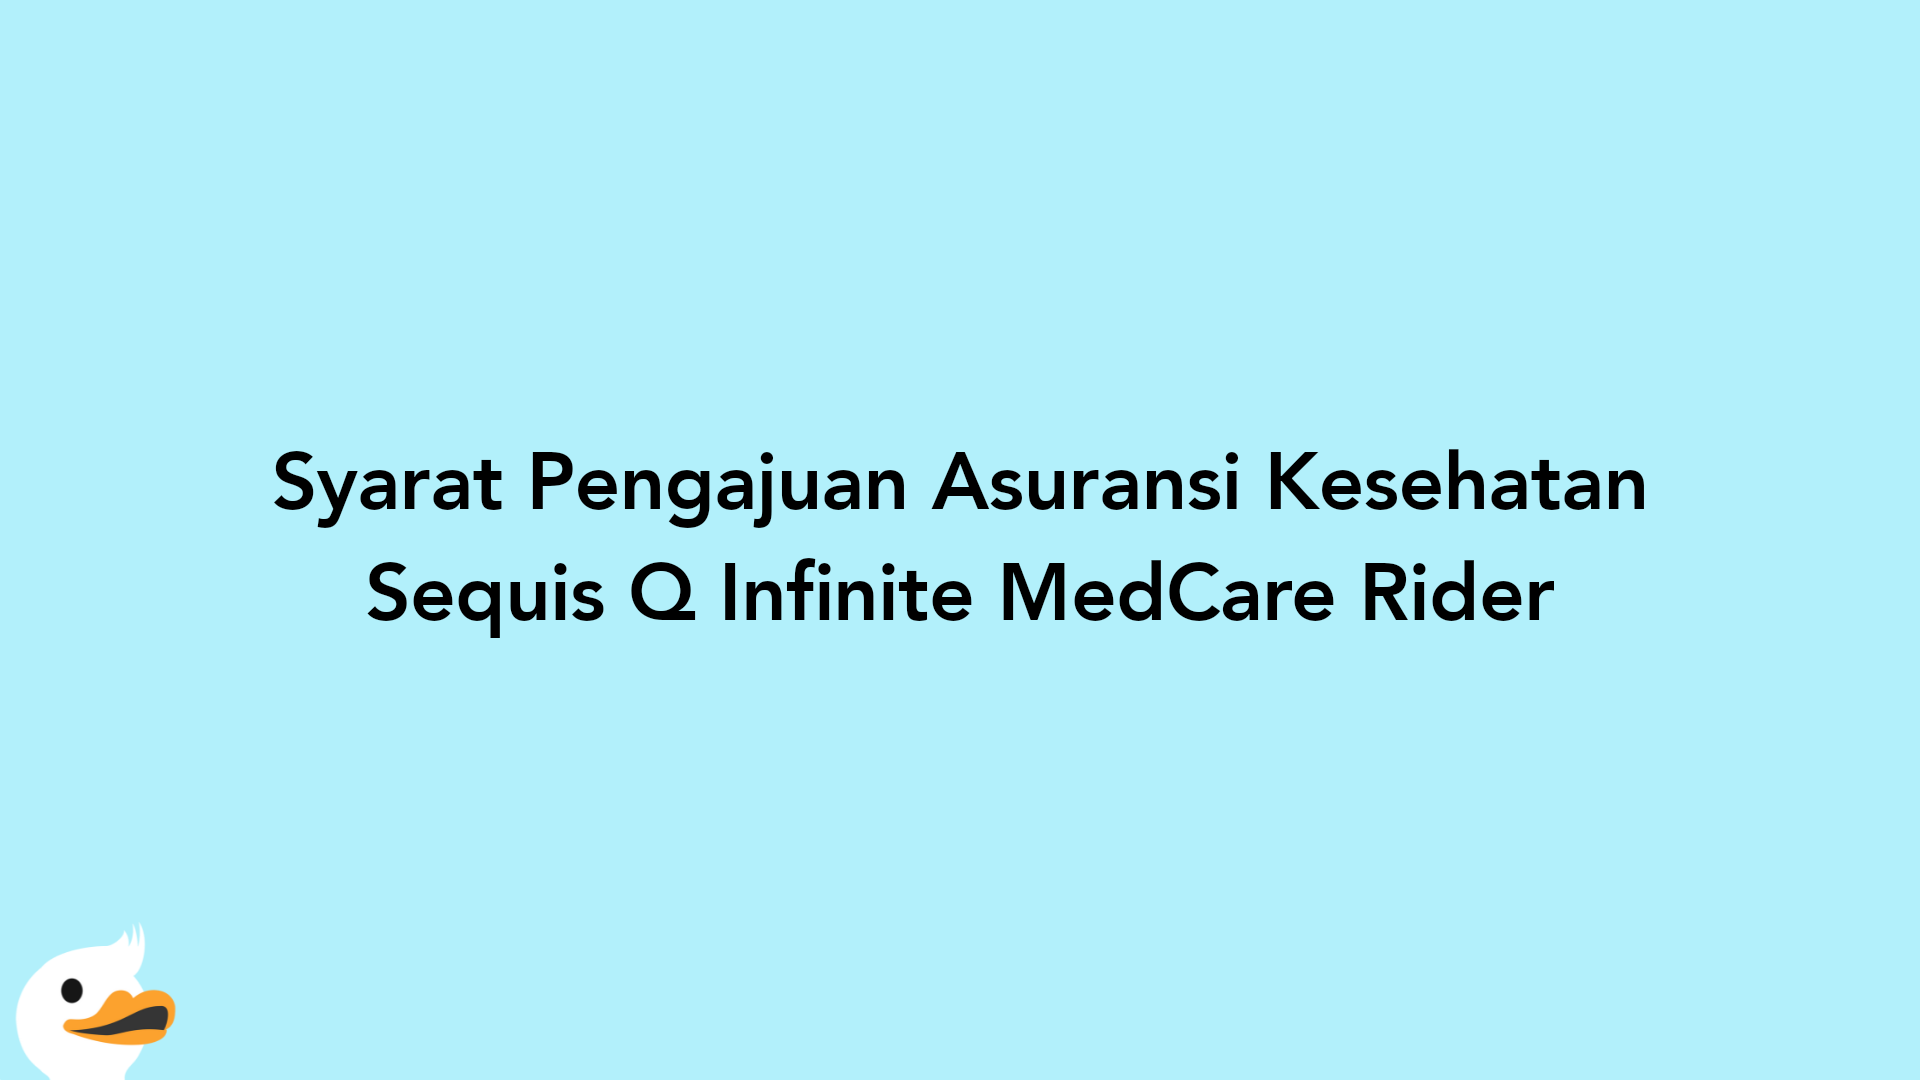 Syarat Pengajuan Asuransi Kesehatan Sequis Q Infinite MedCare Rider